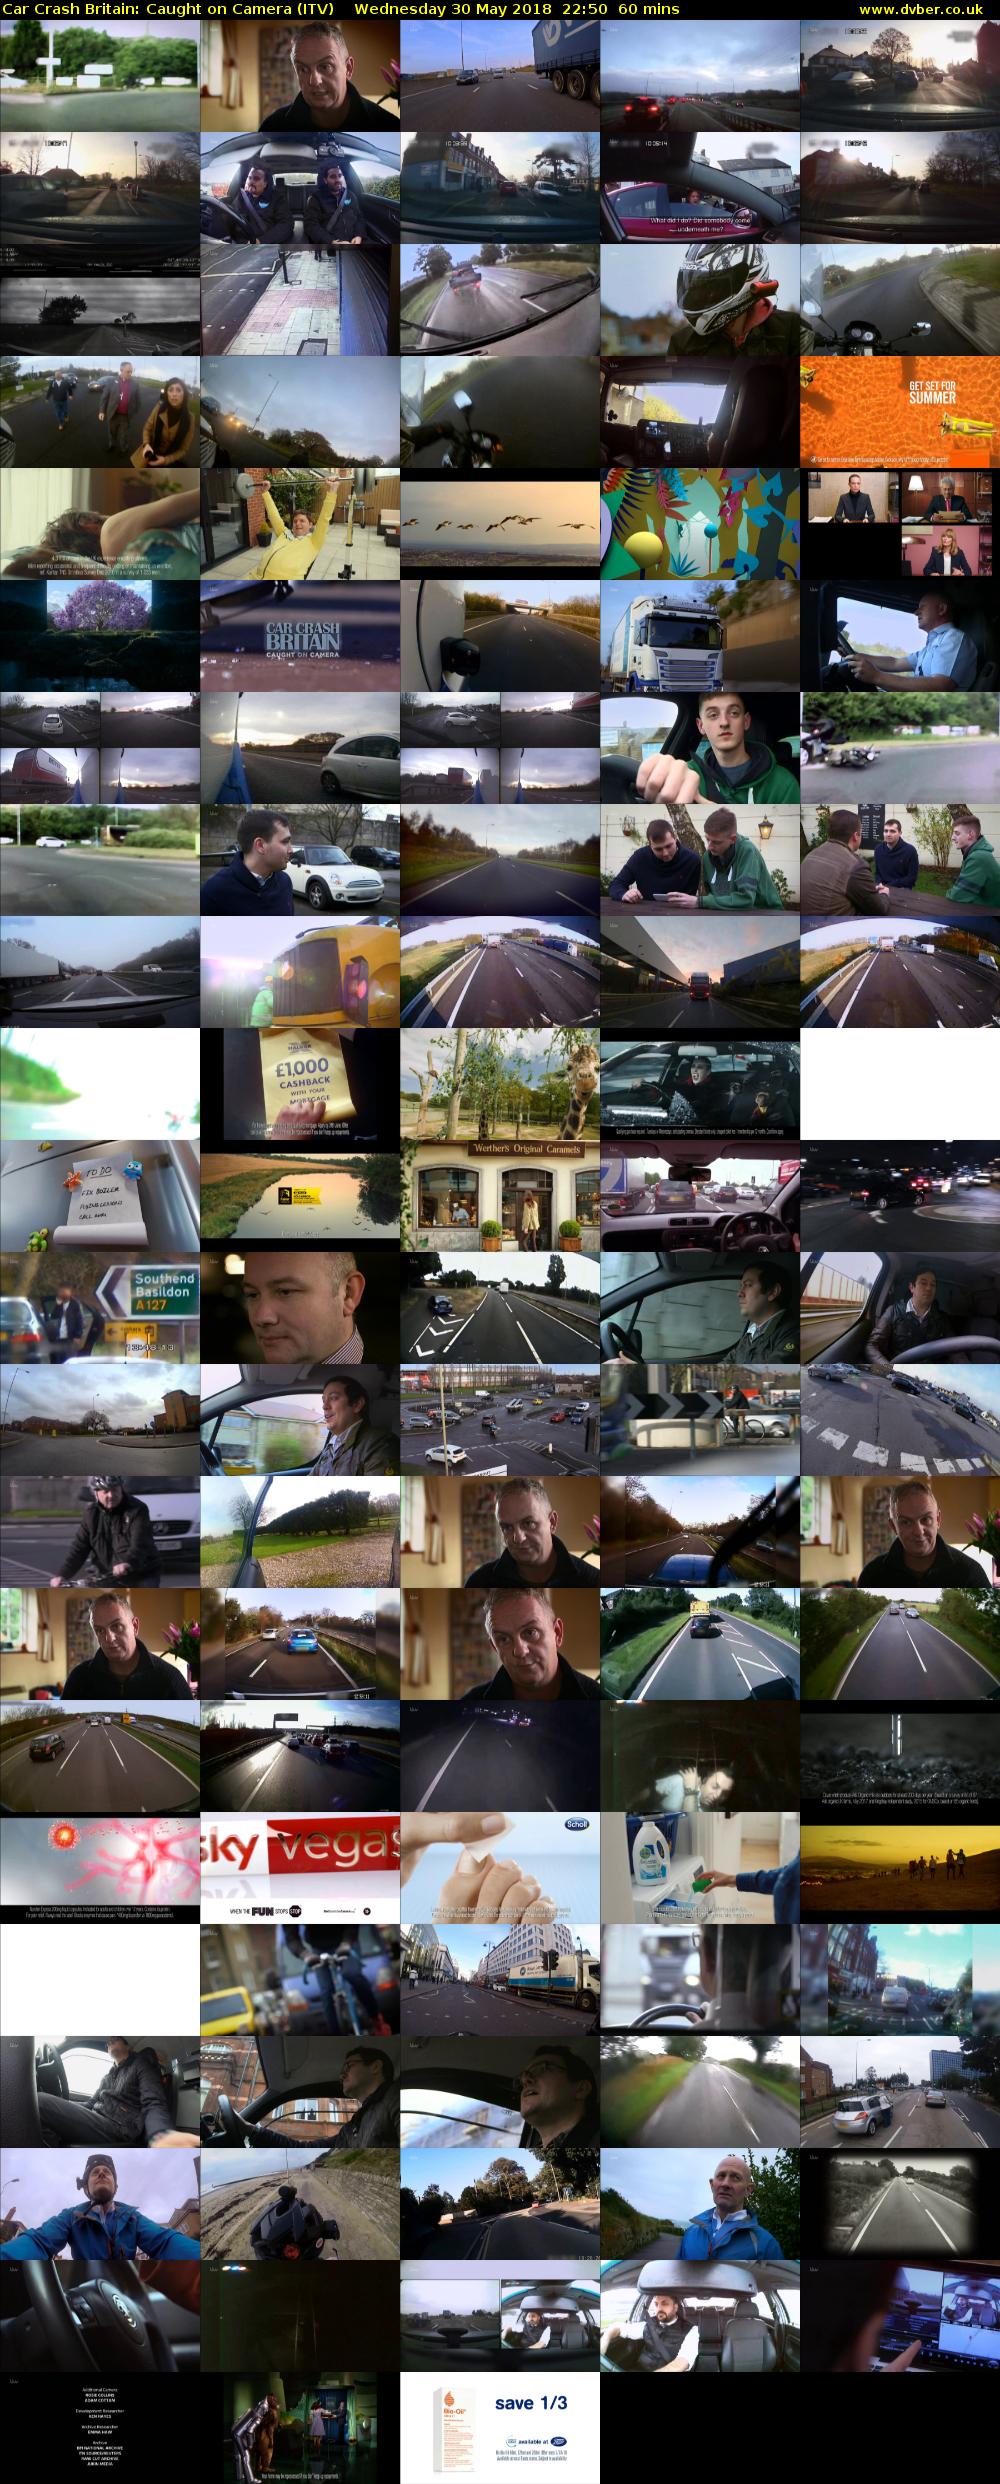 Car Crash Britain: Caught on Camera (ITV) Wednesday 30 May 2018 22:50 - 23:50